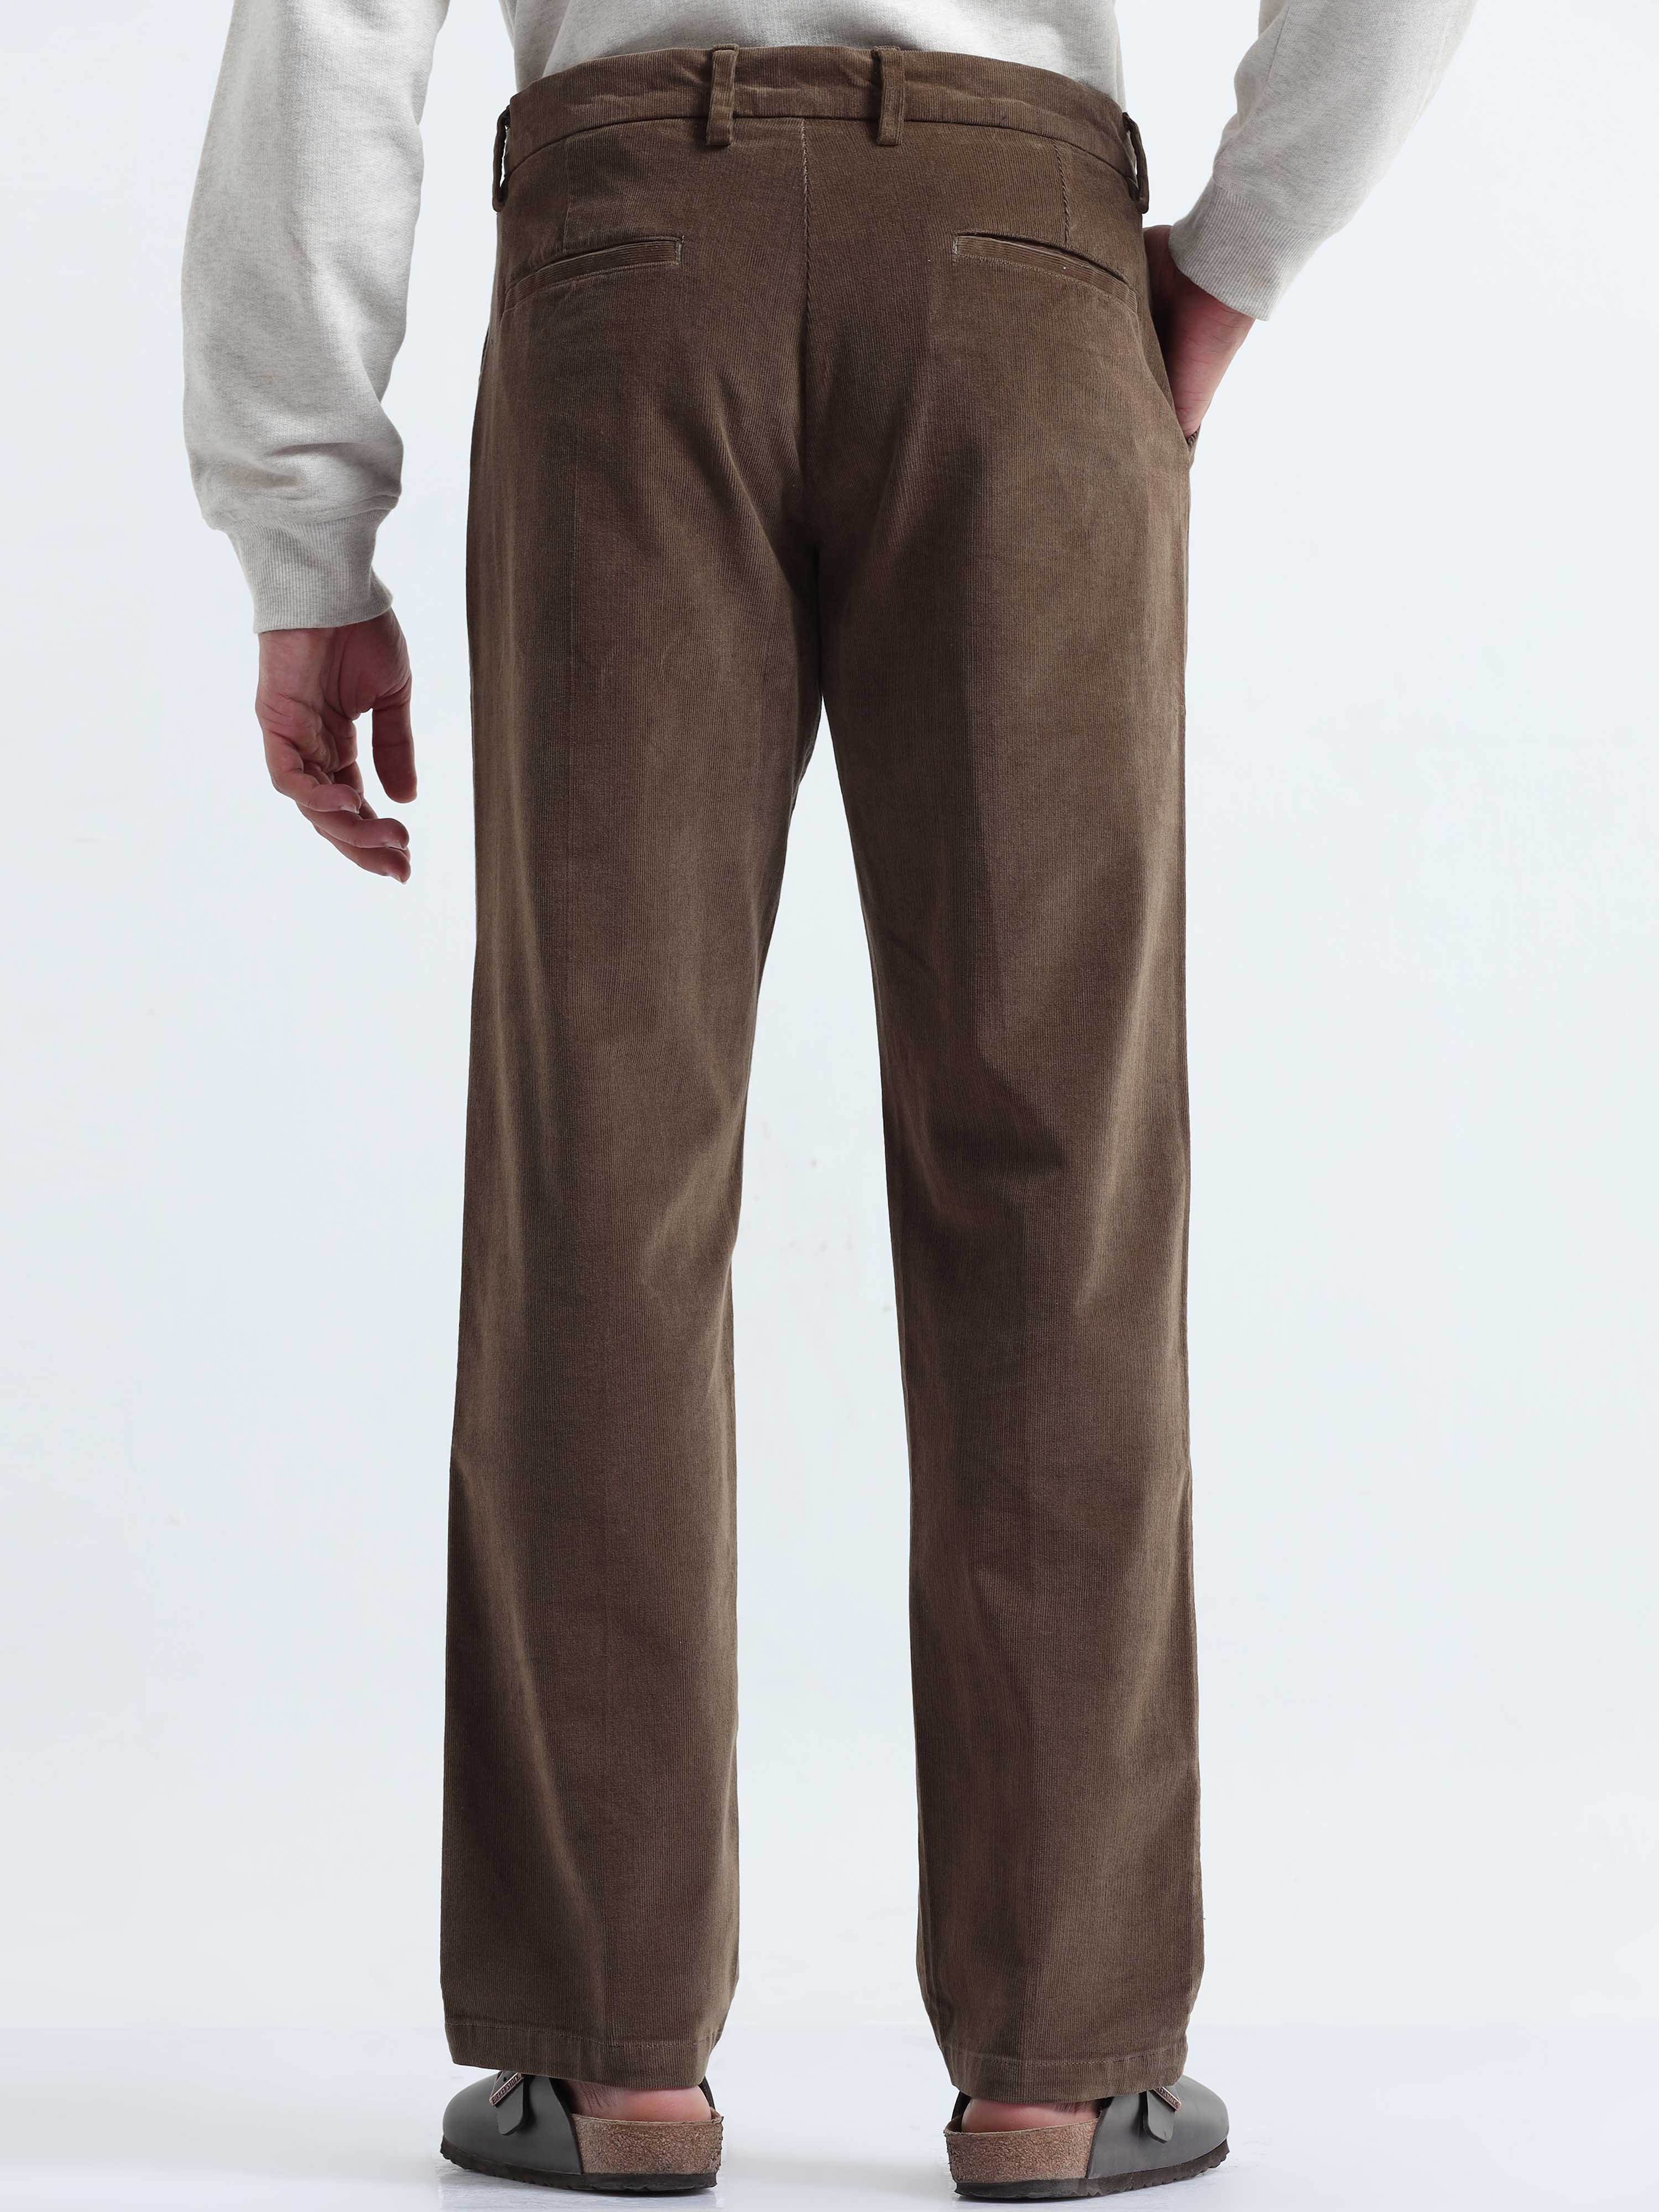 Oak Olive Corduroy Pants for Men